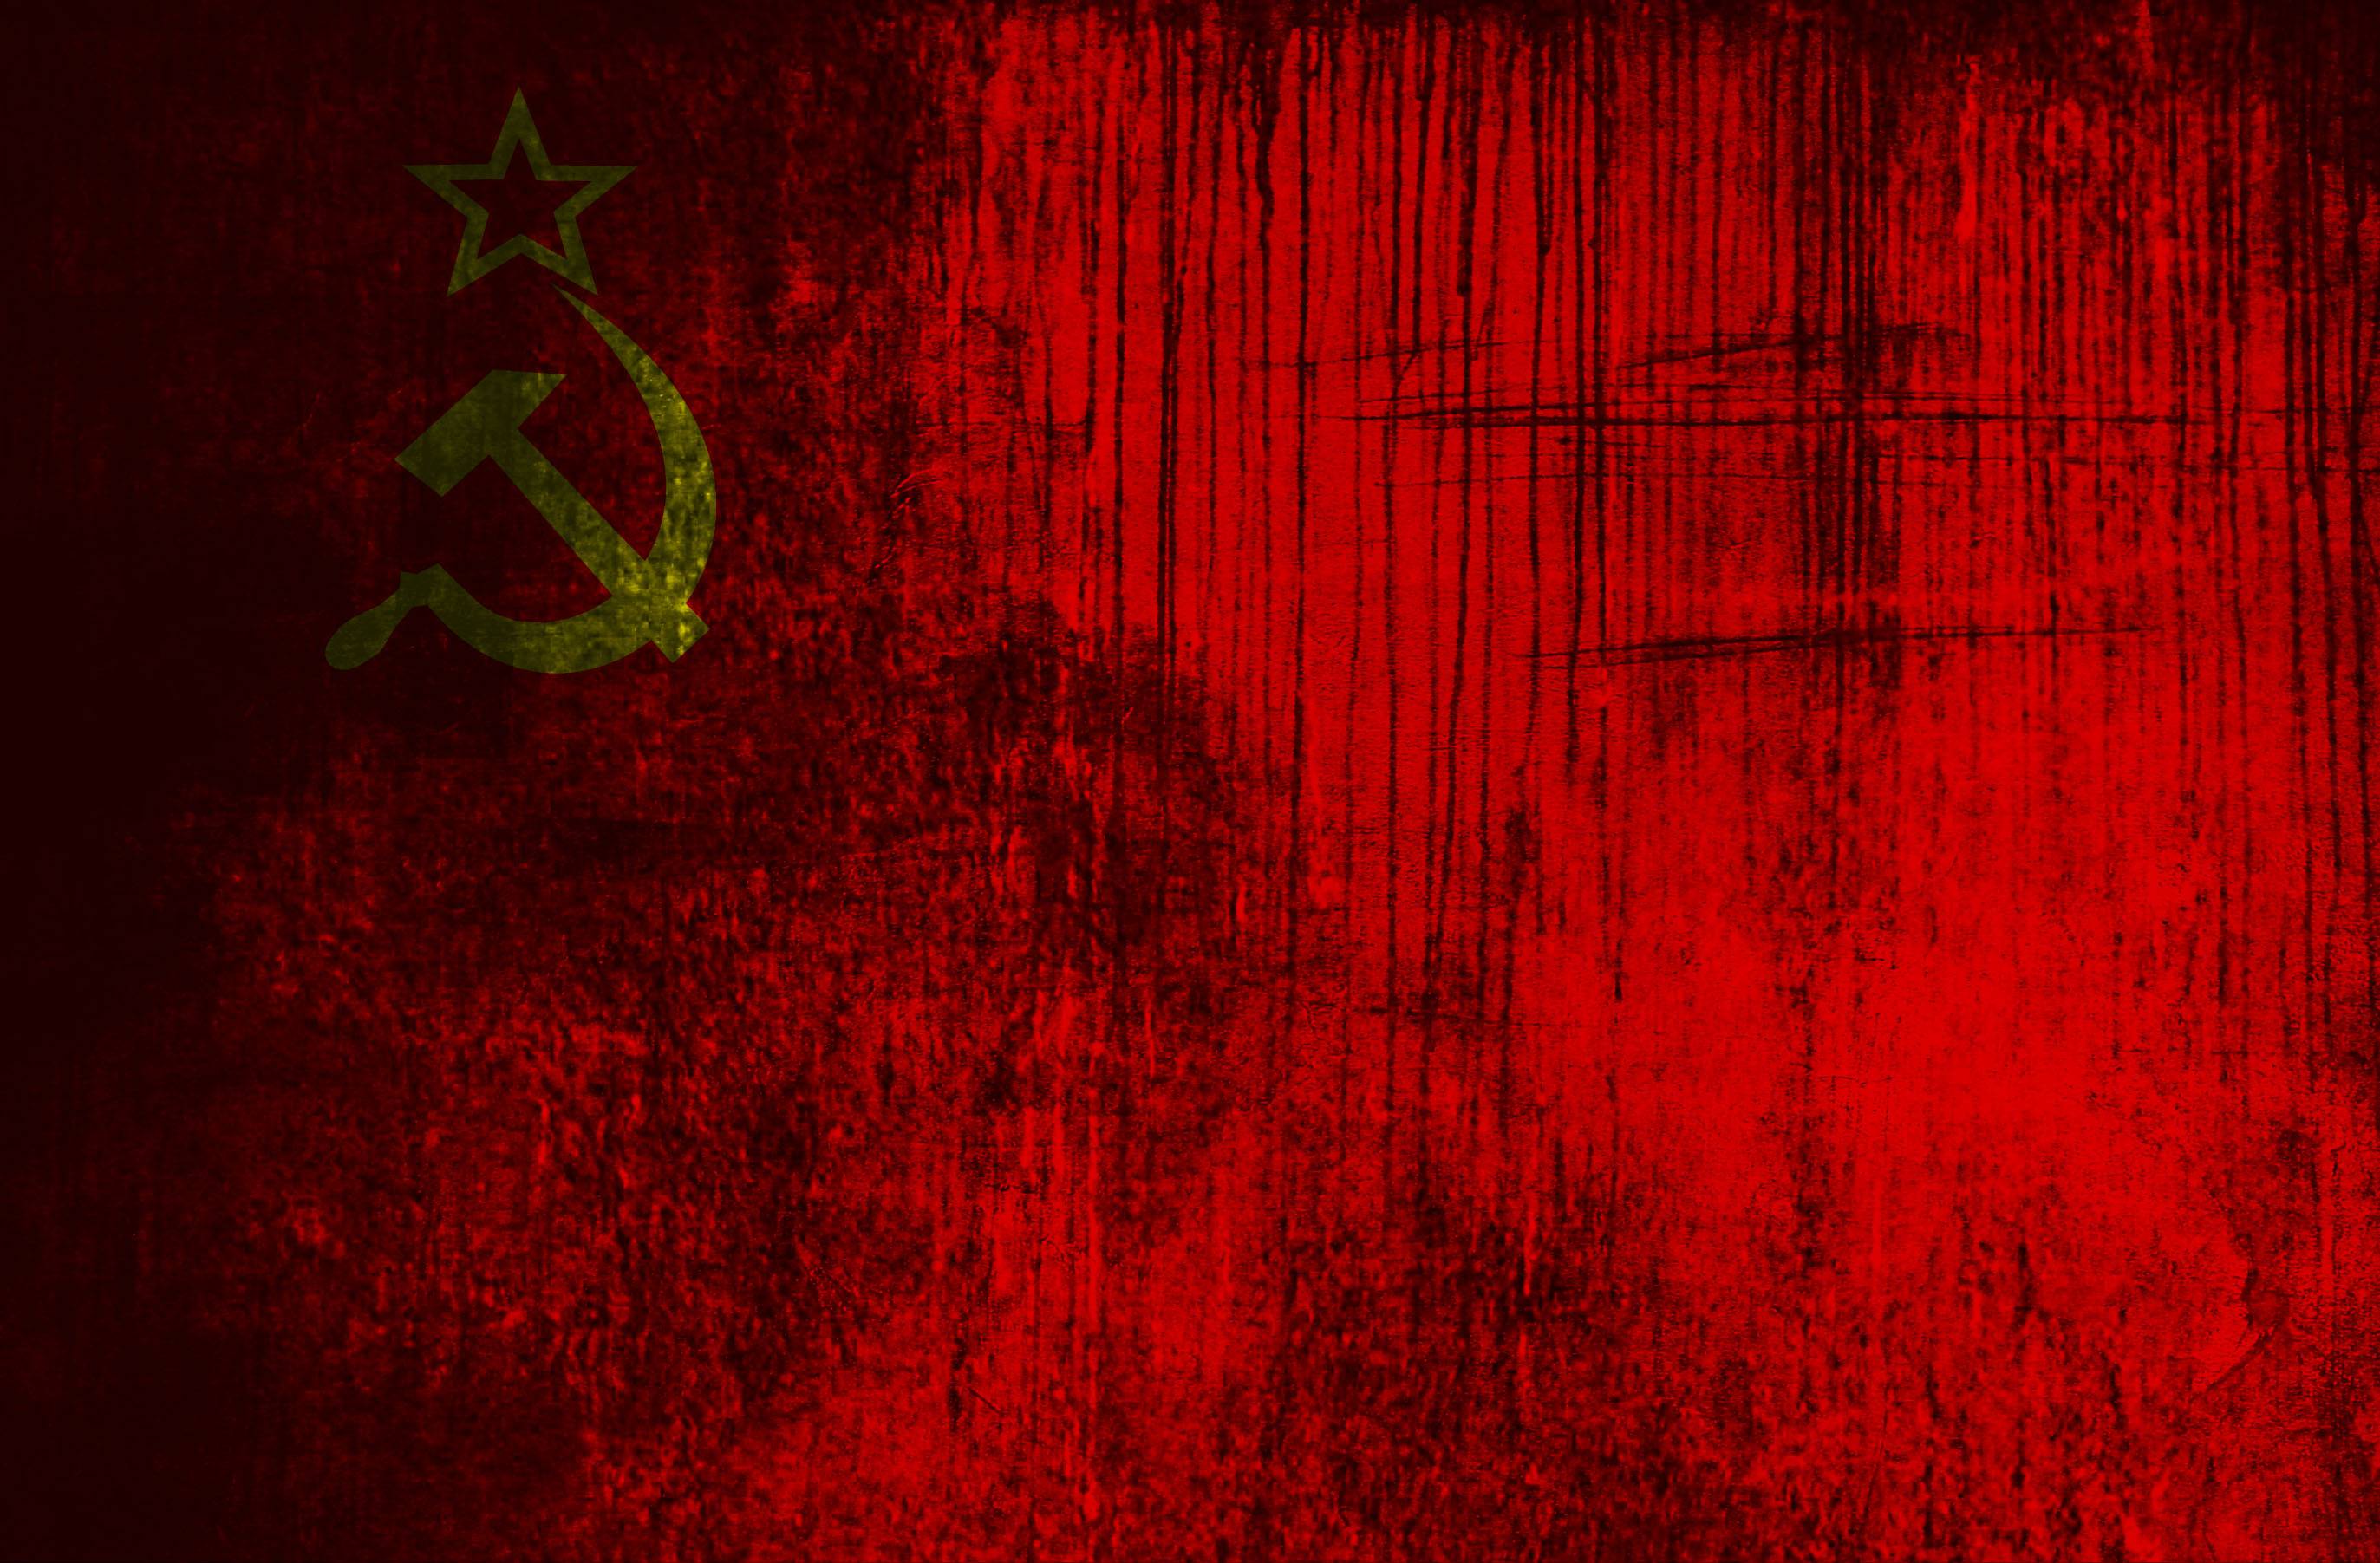 Hd Wallpapers Soviet Union Soldiers 2045 X 1402 2049 Kb Jpeg